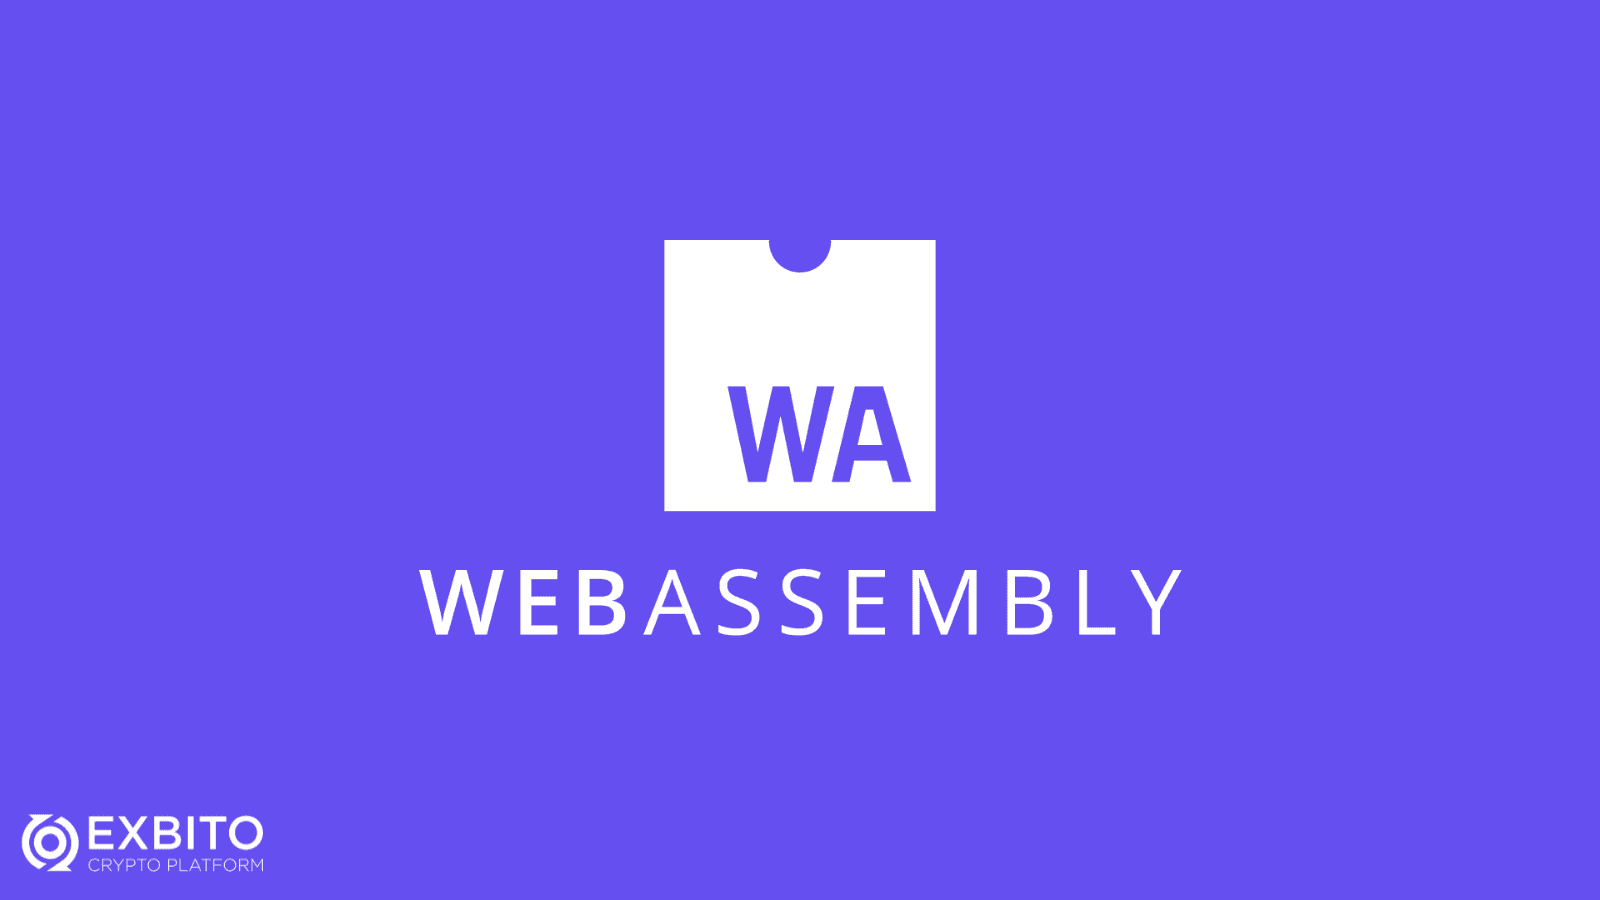 وب اسمبلی (WebAssembly)